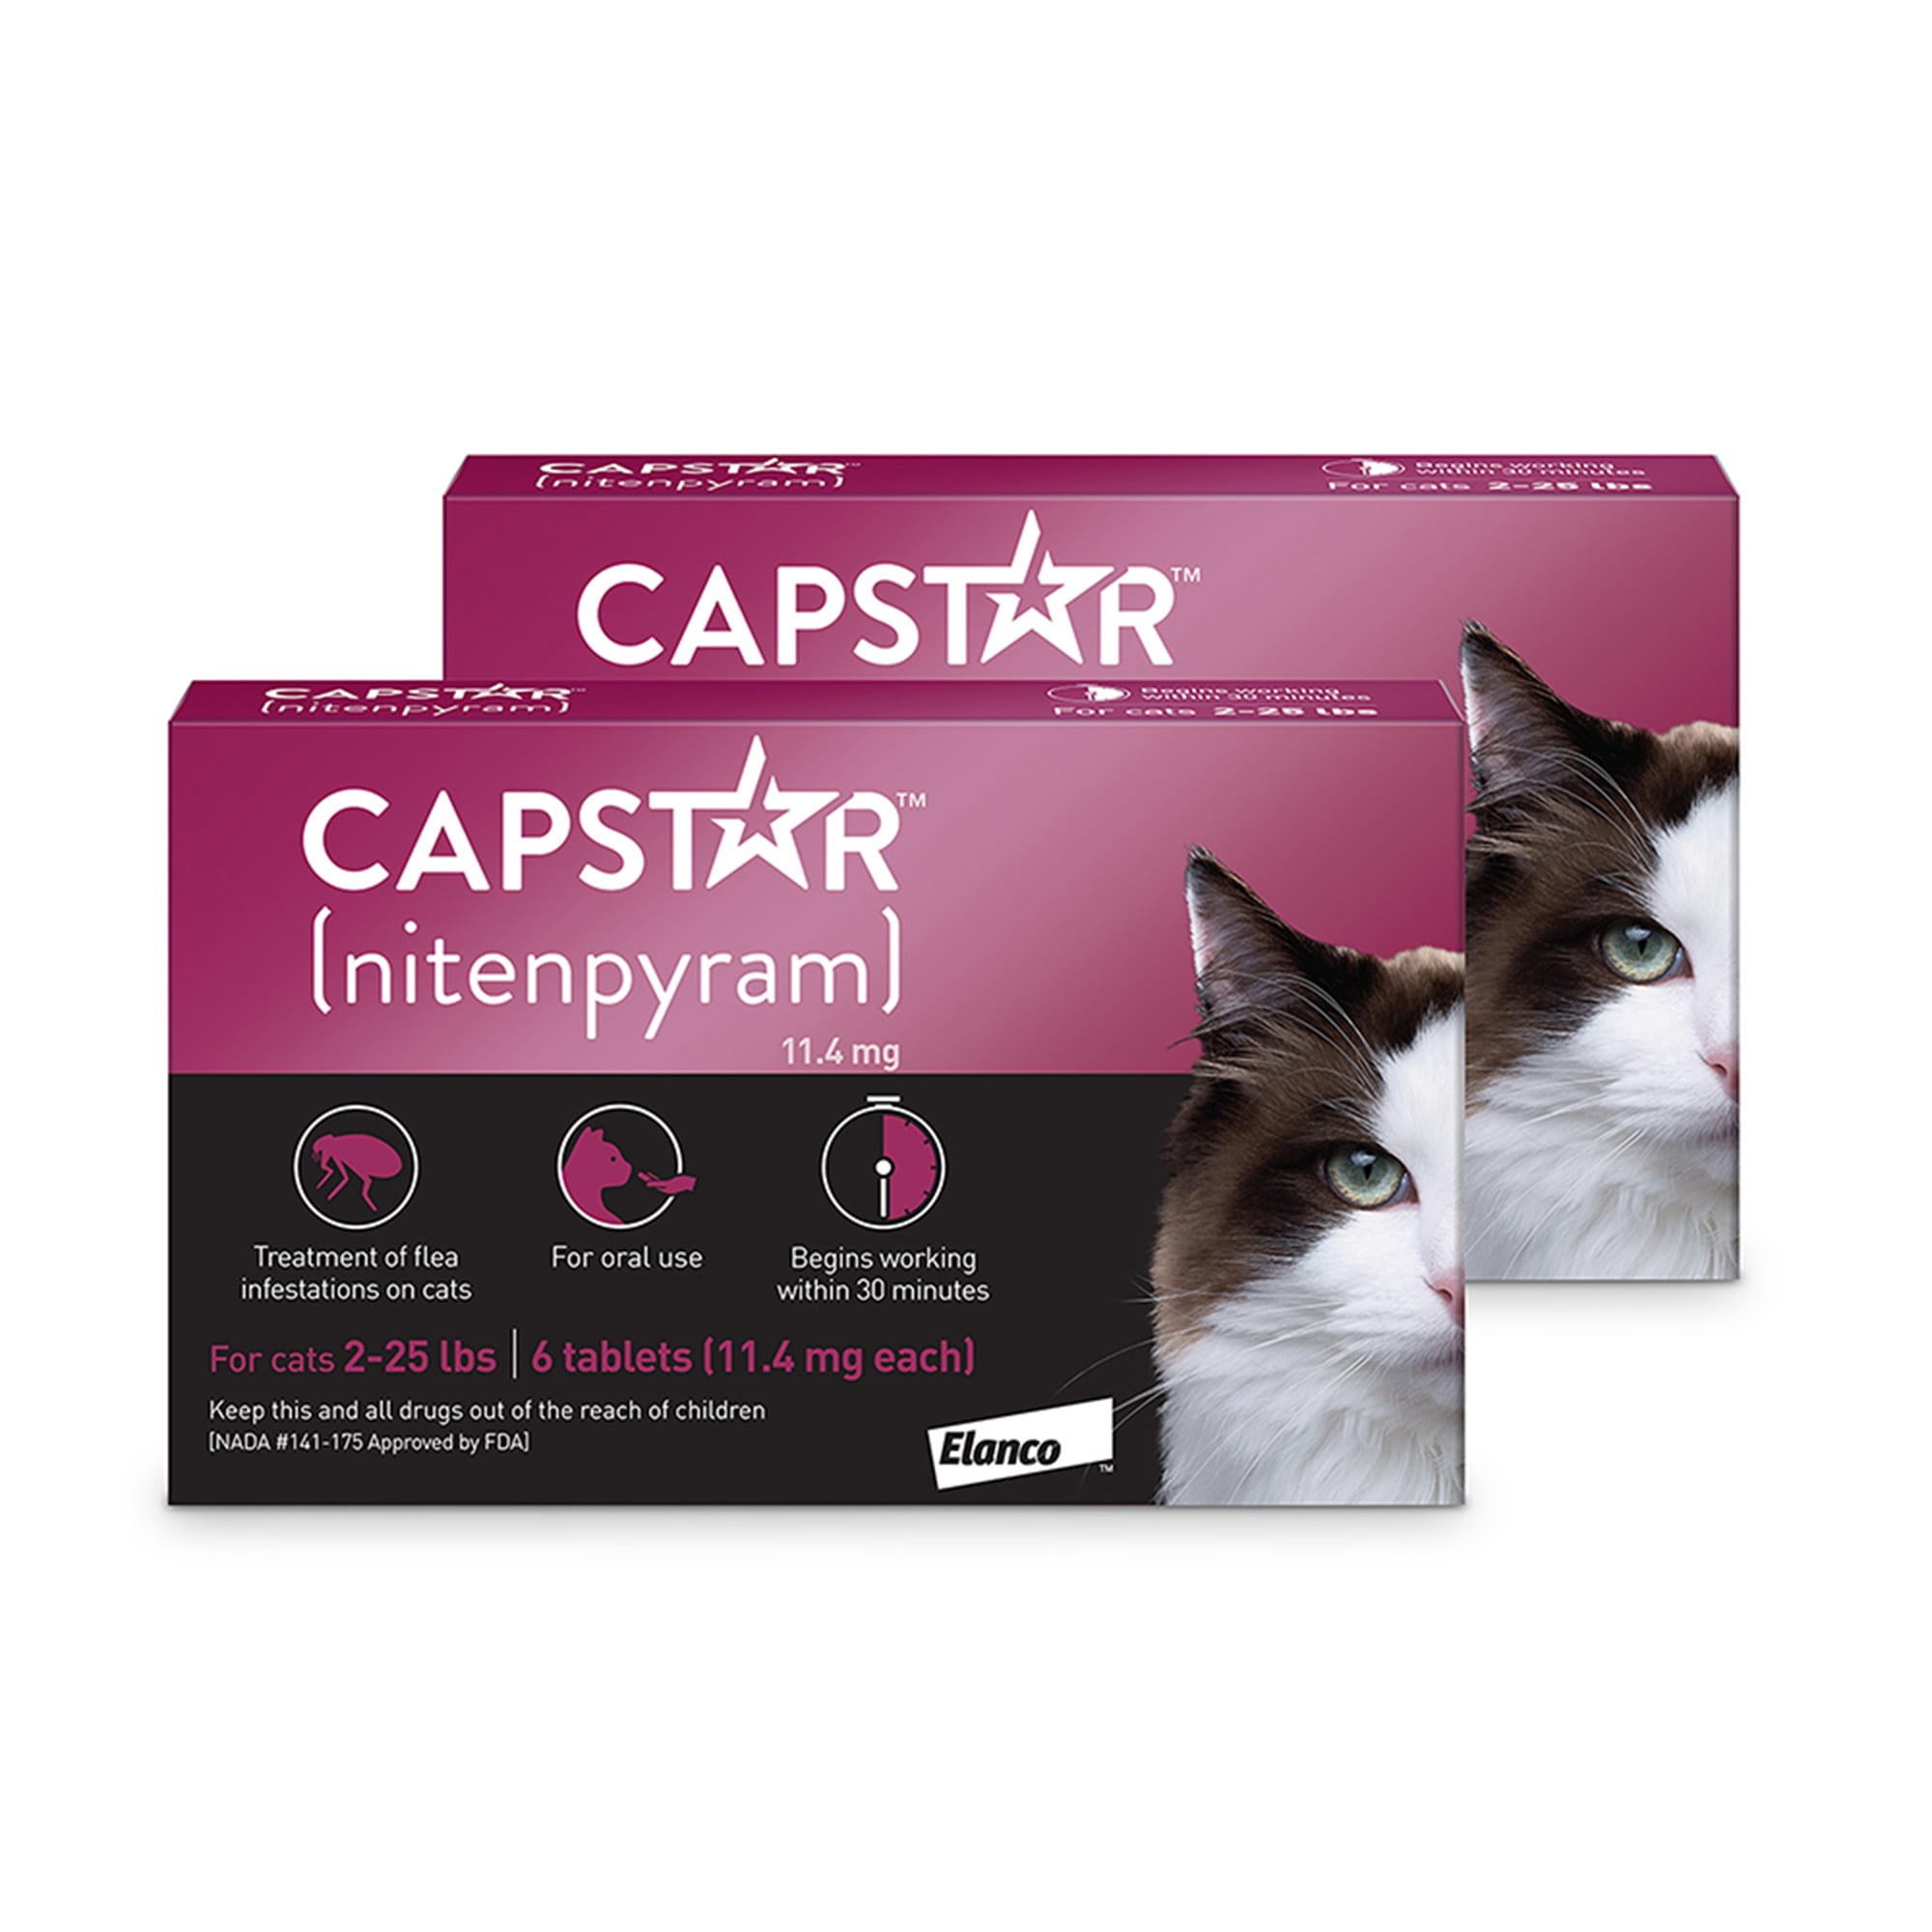 Capstar flea tablets for cats